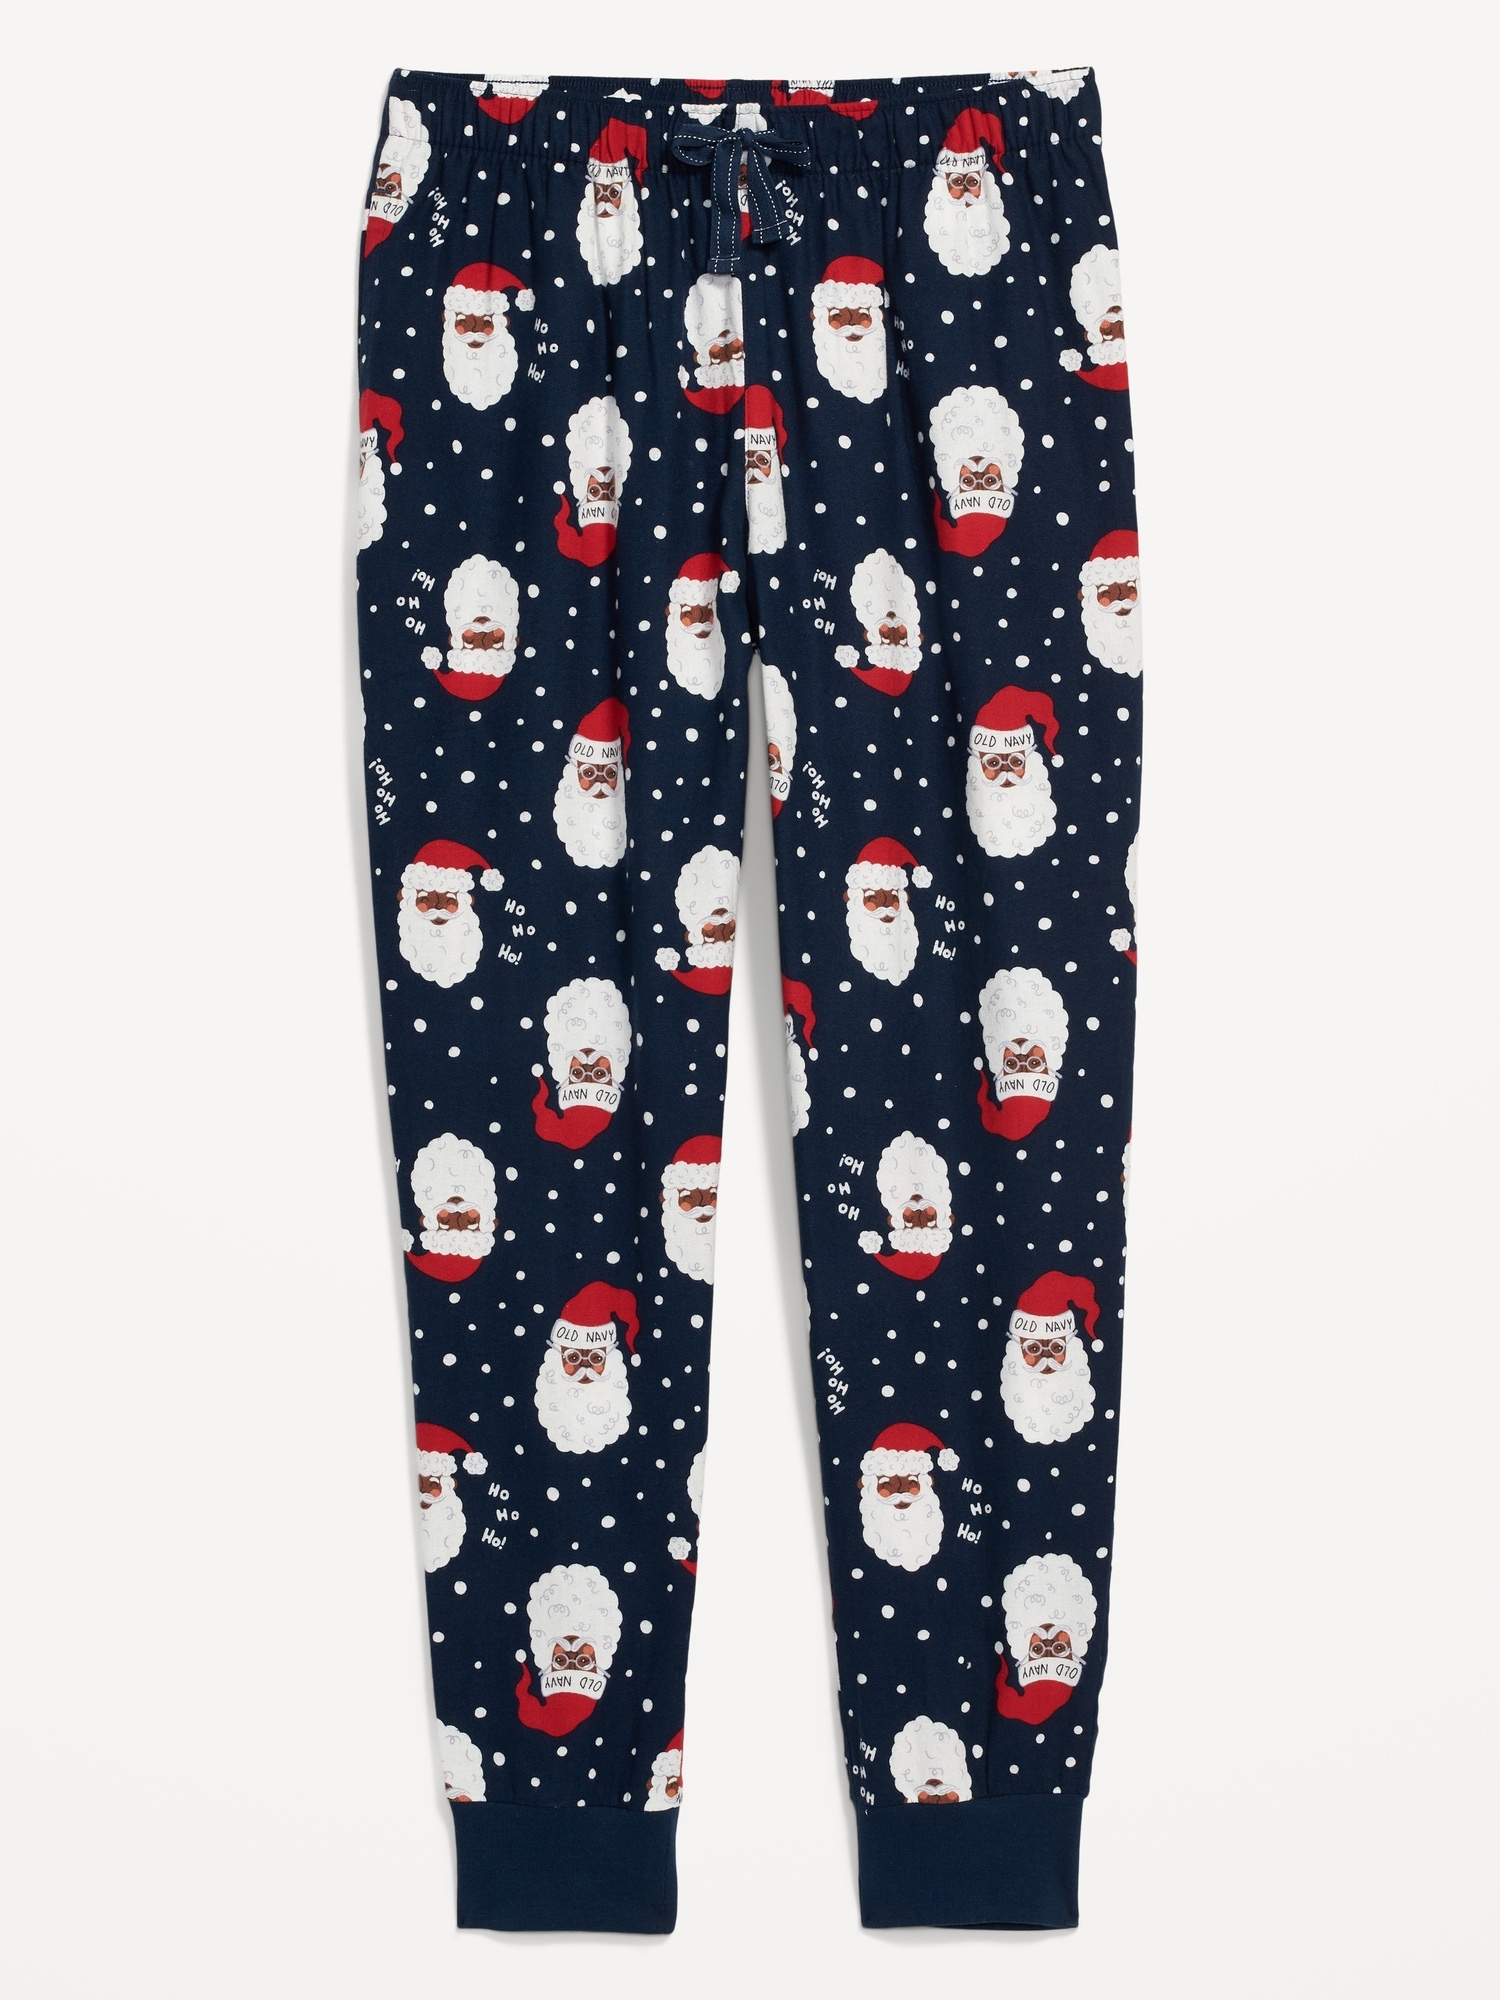 Printed Flannel Jogger Pajama Pants | Old Navy